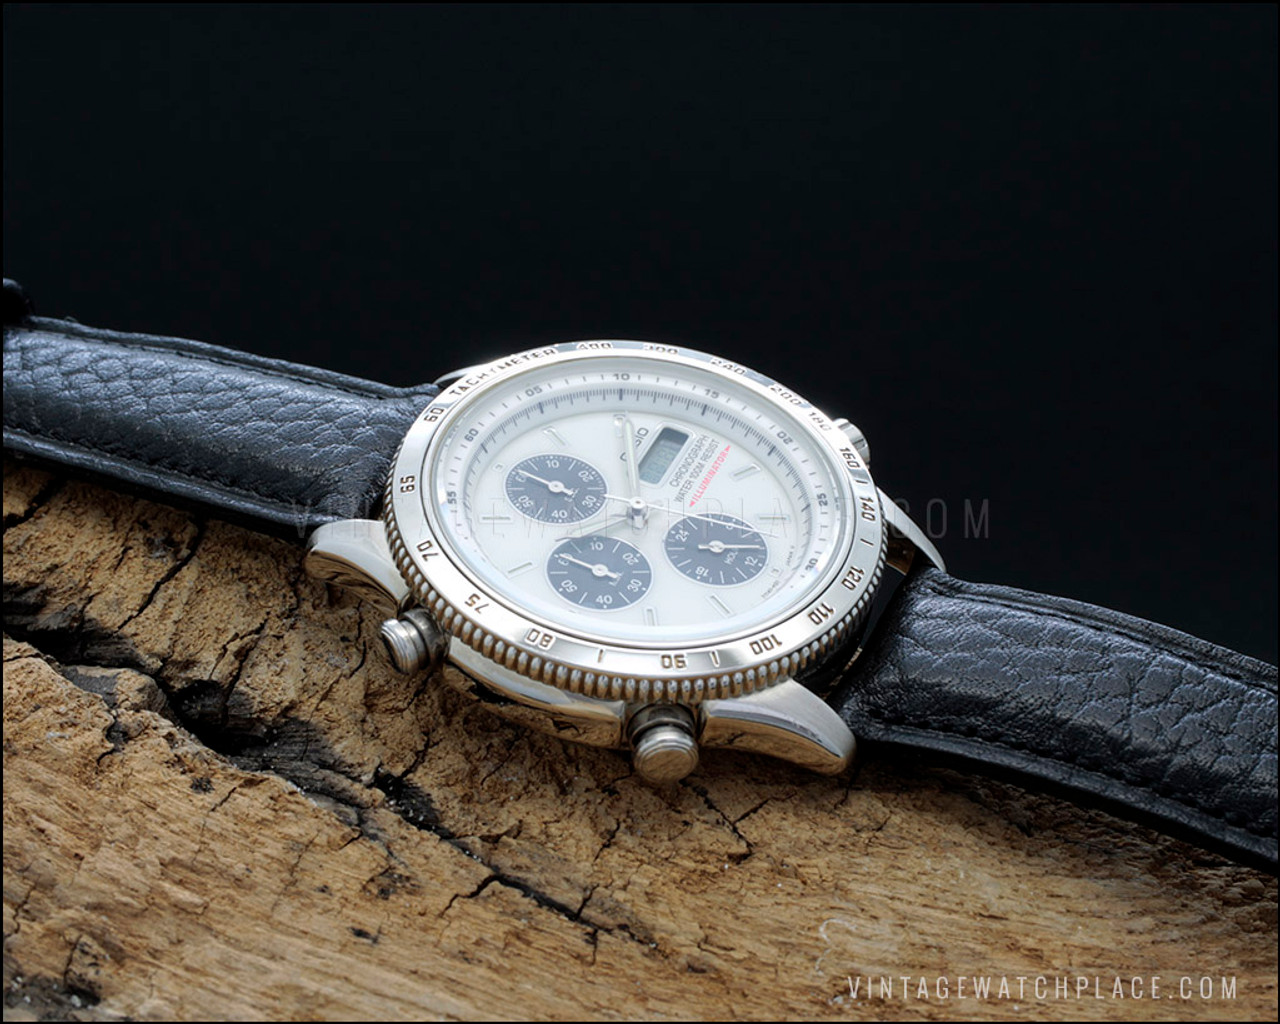 Casio chronograph MWA-810 vintage quartz watch, Ana-Digi